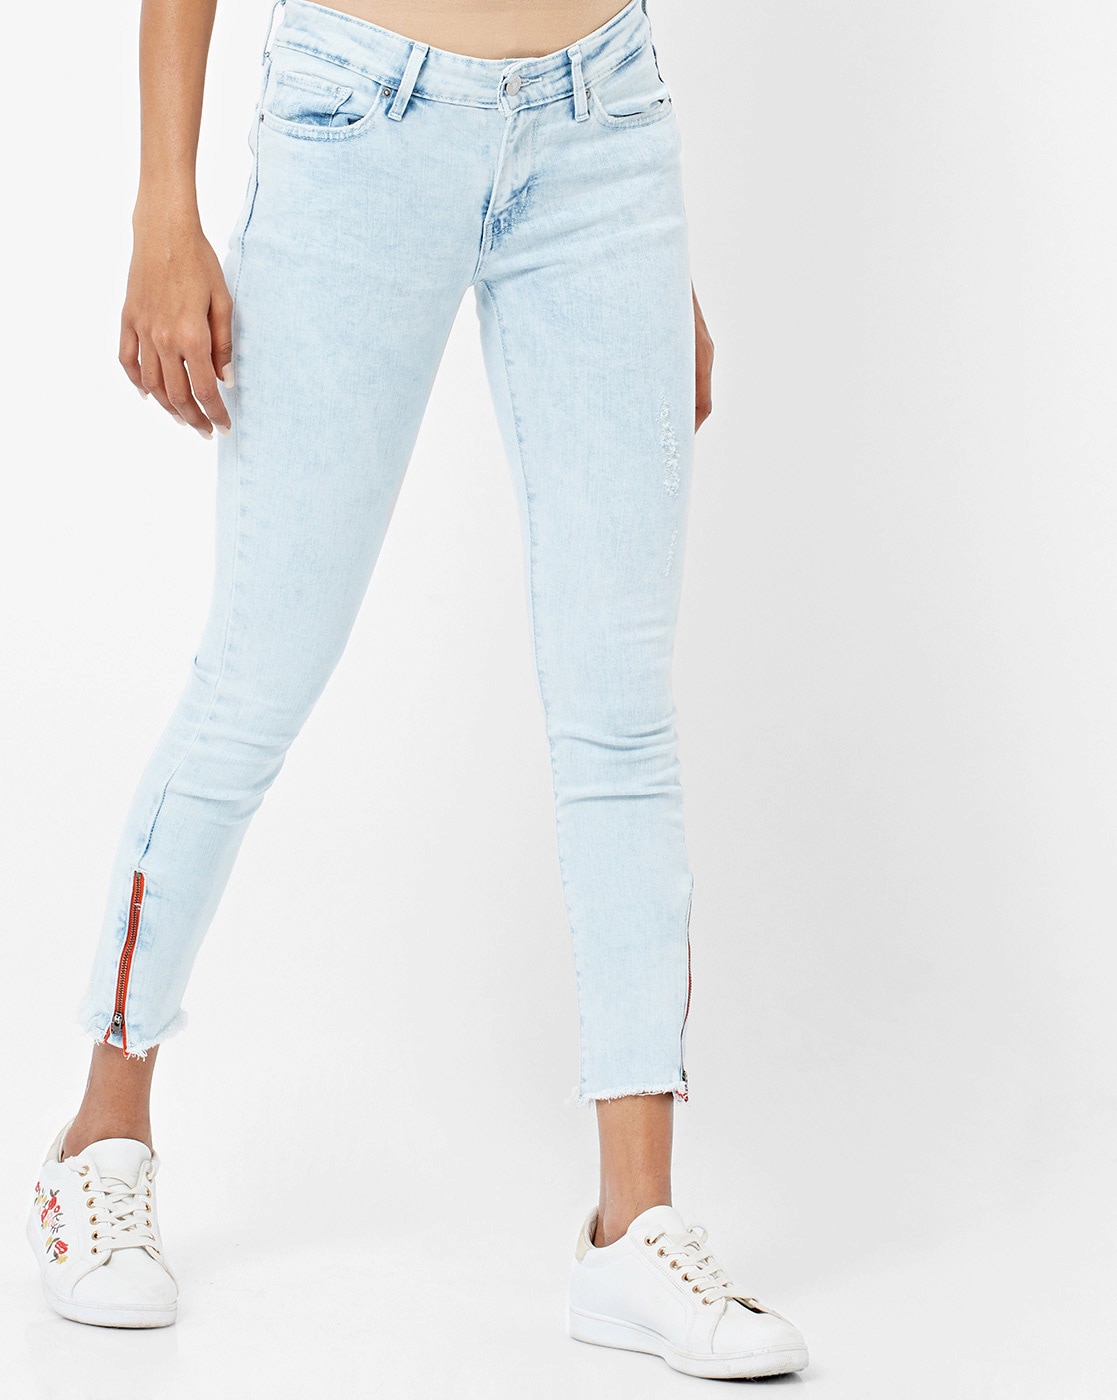 low rise levi's jeans womens